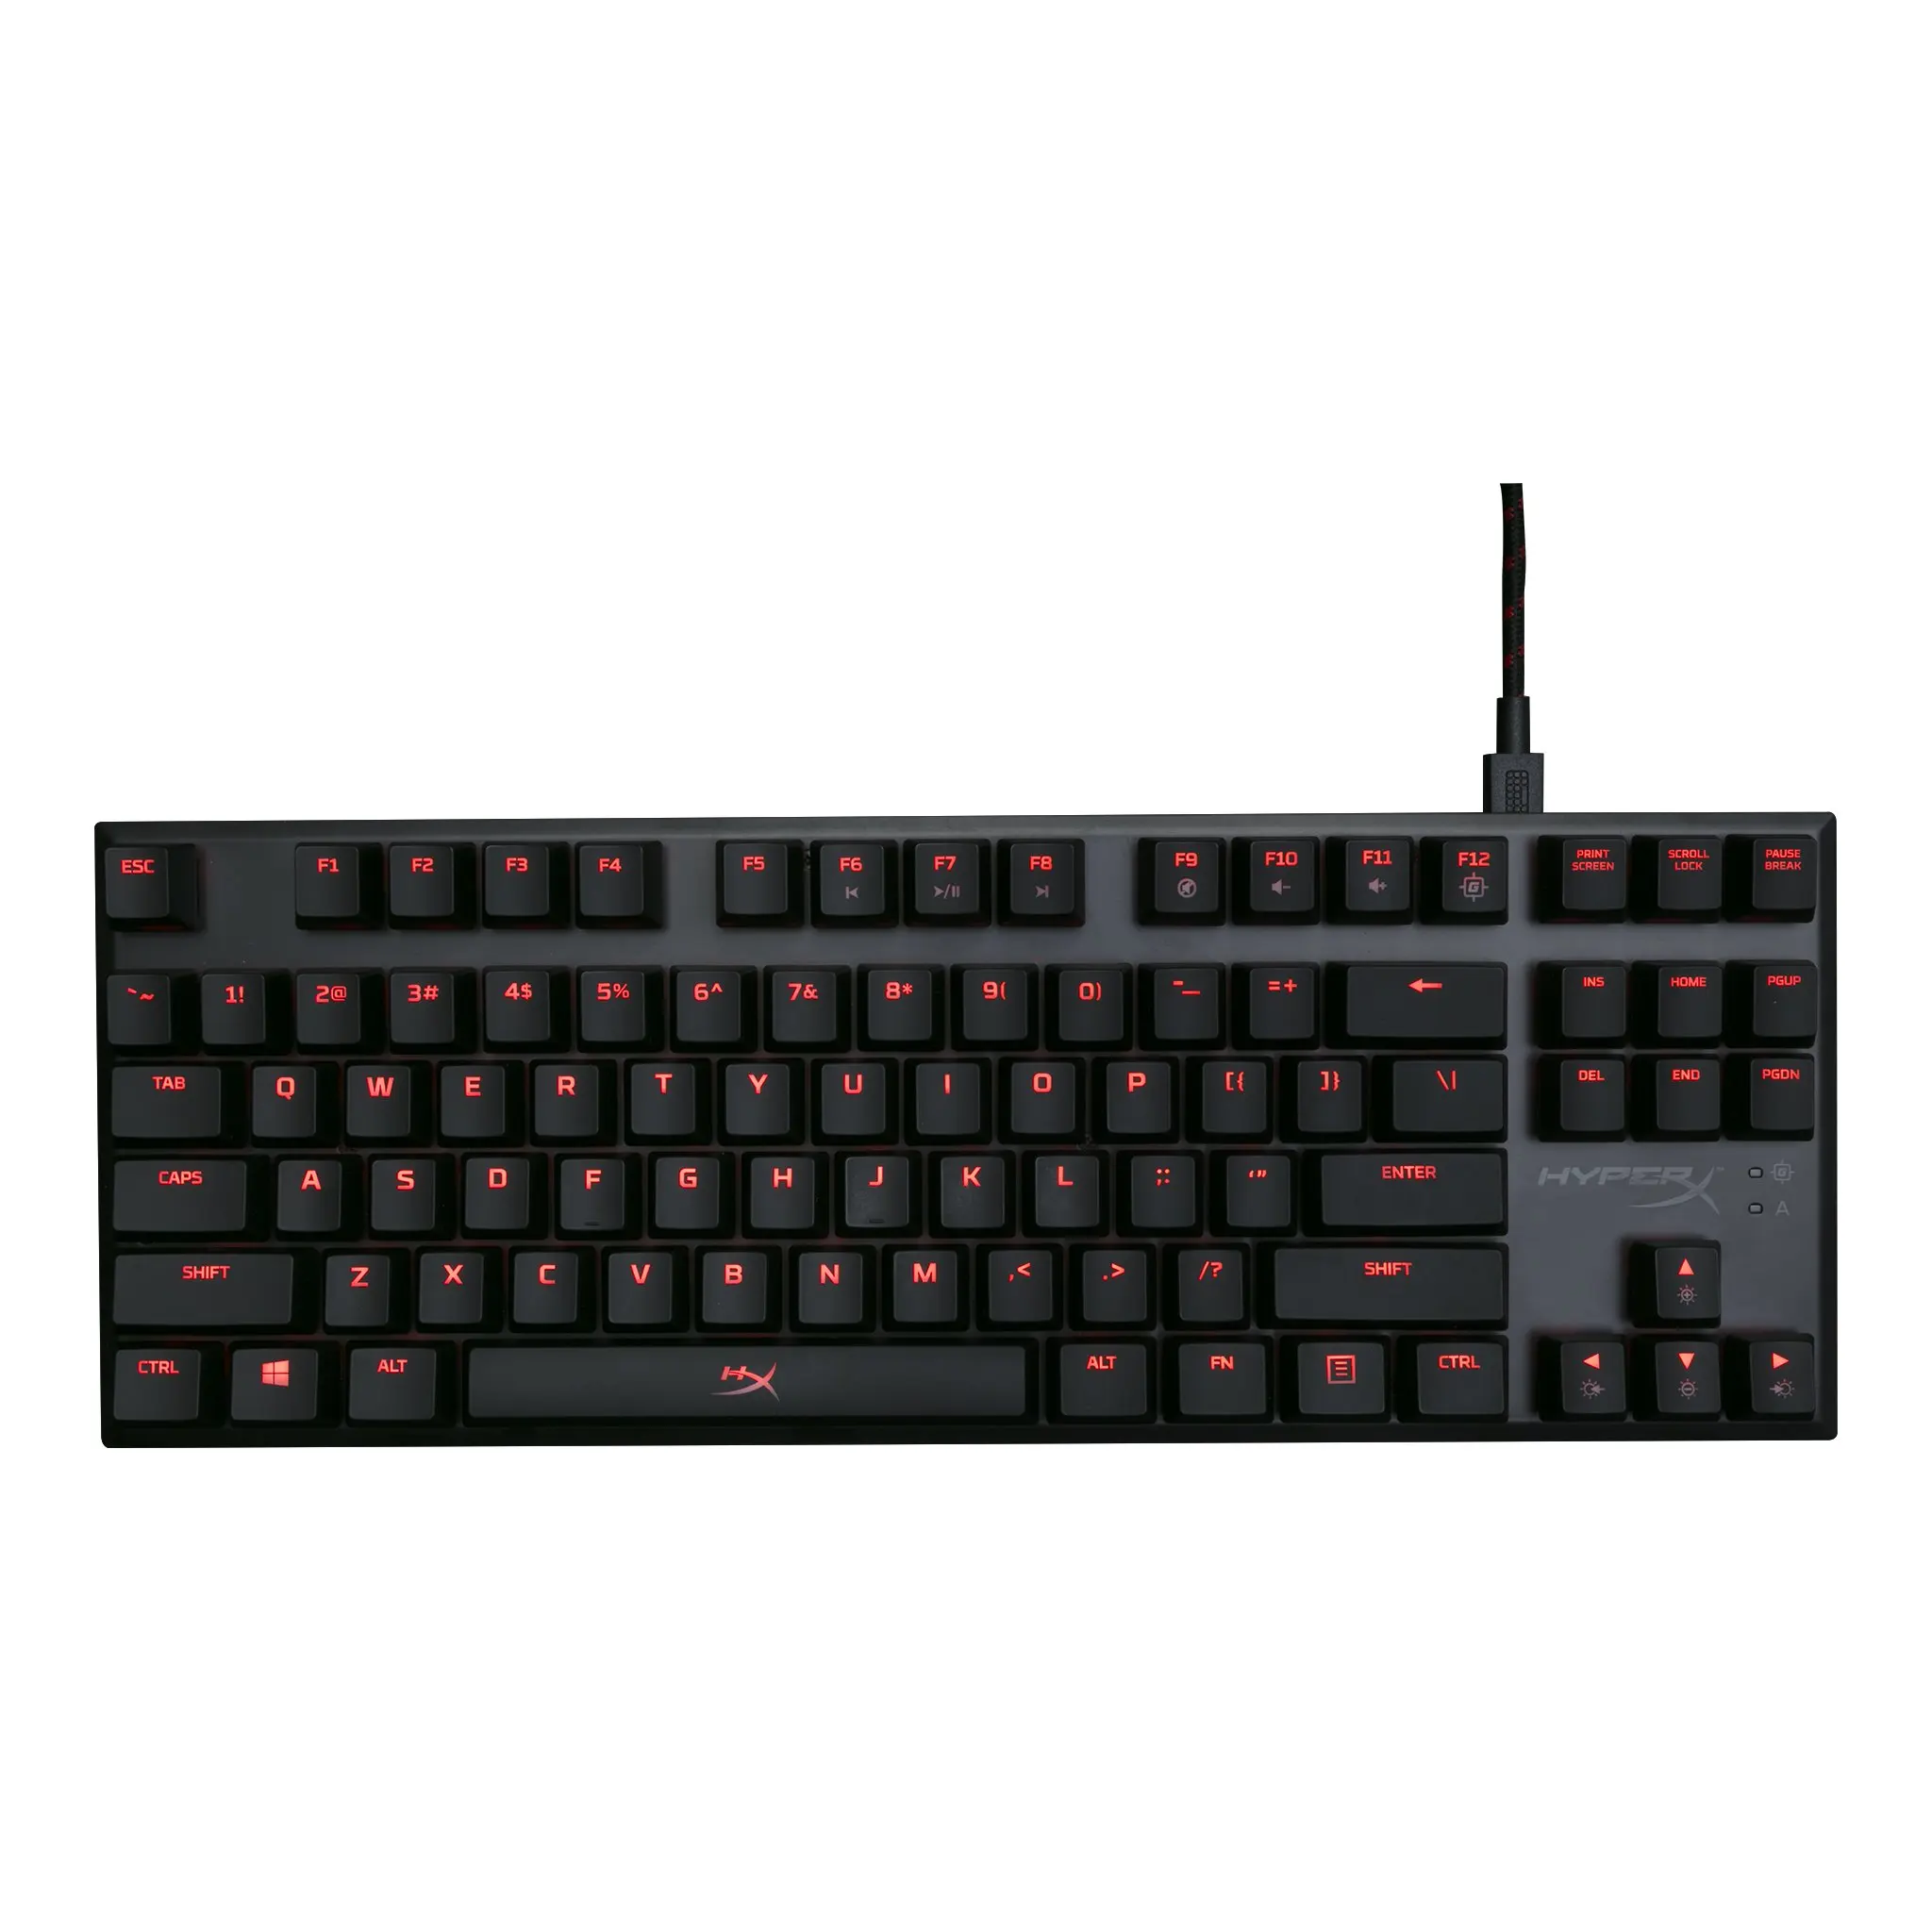 

Hyper X Alloy FPS Pro Mechanical Gaming Keyboard 87 Keys Ultra Compact Form Factor, Black